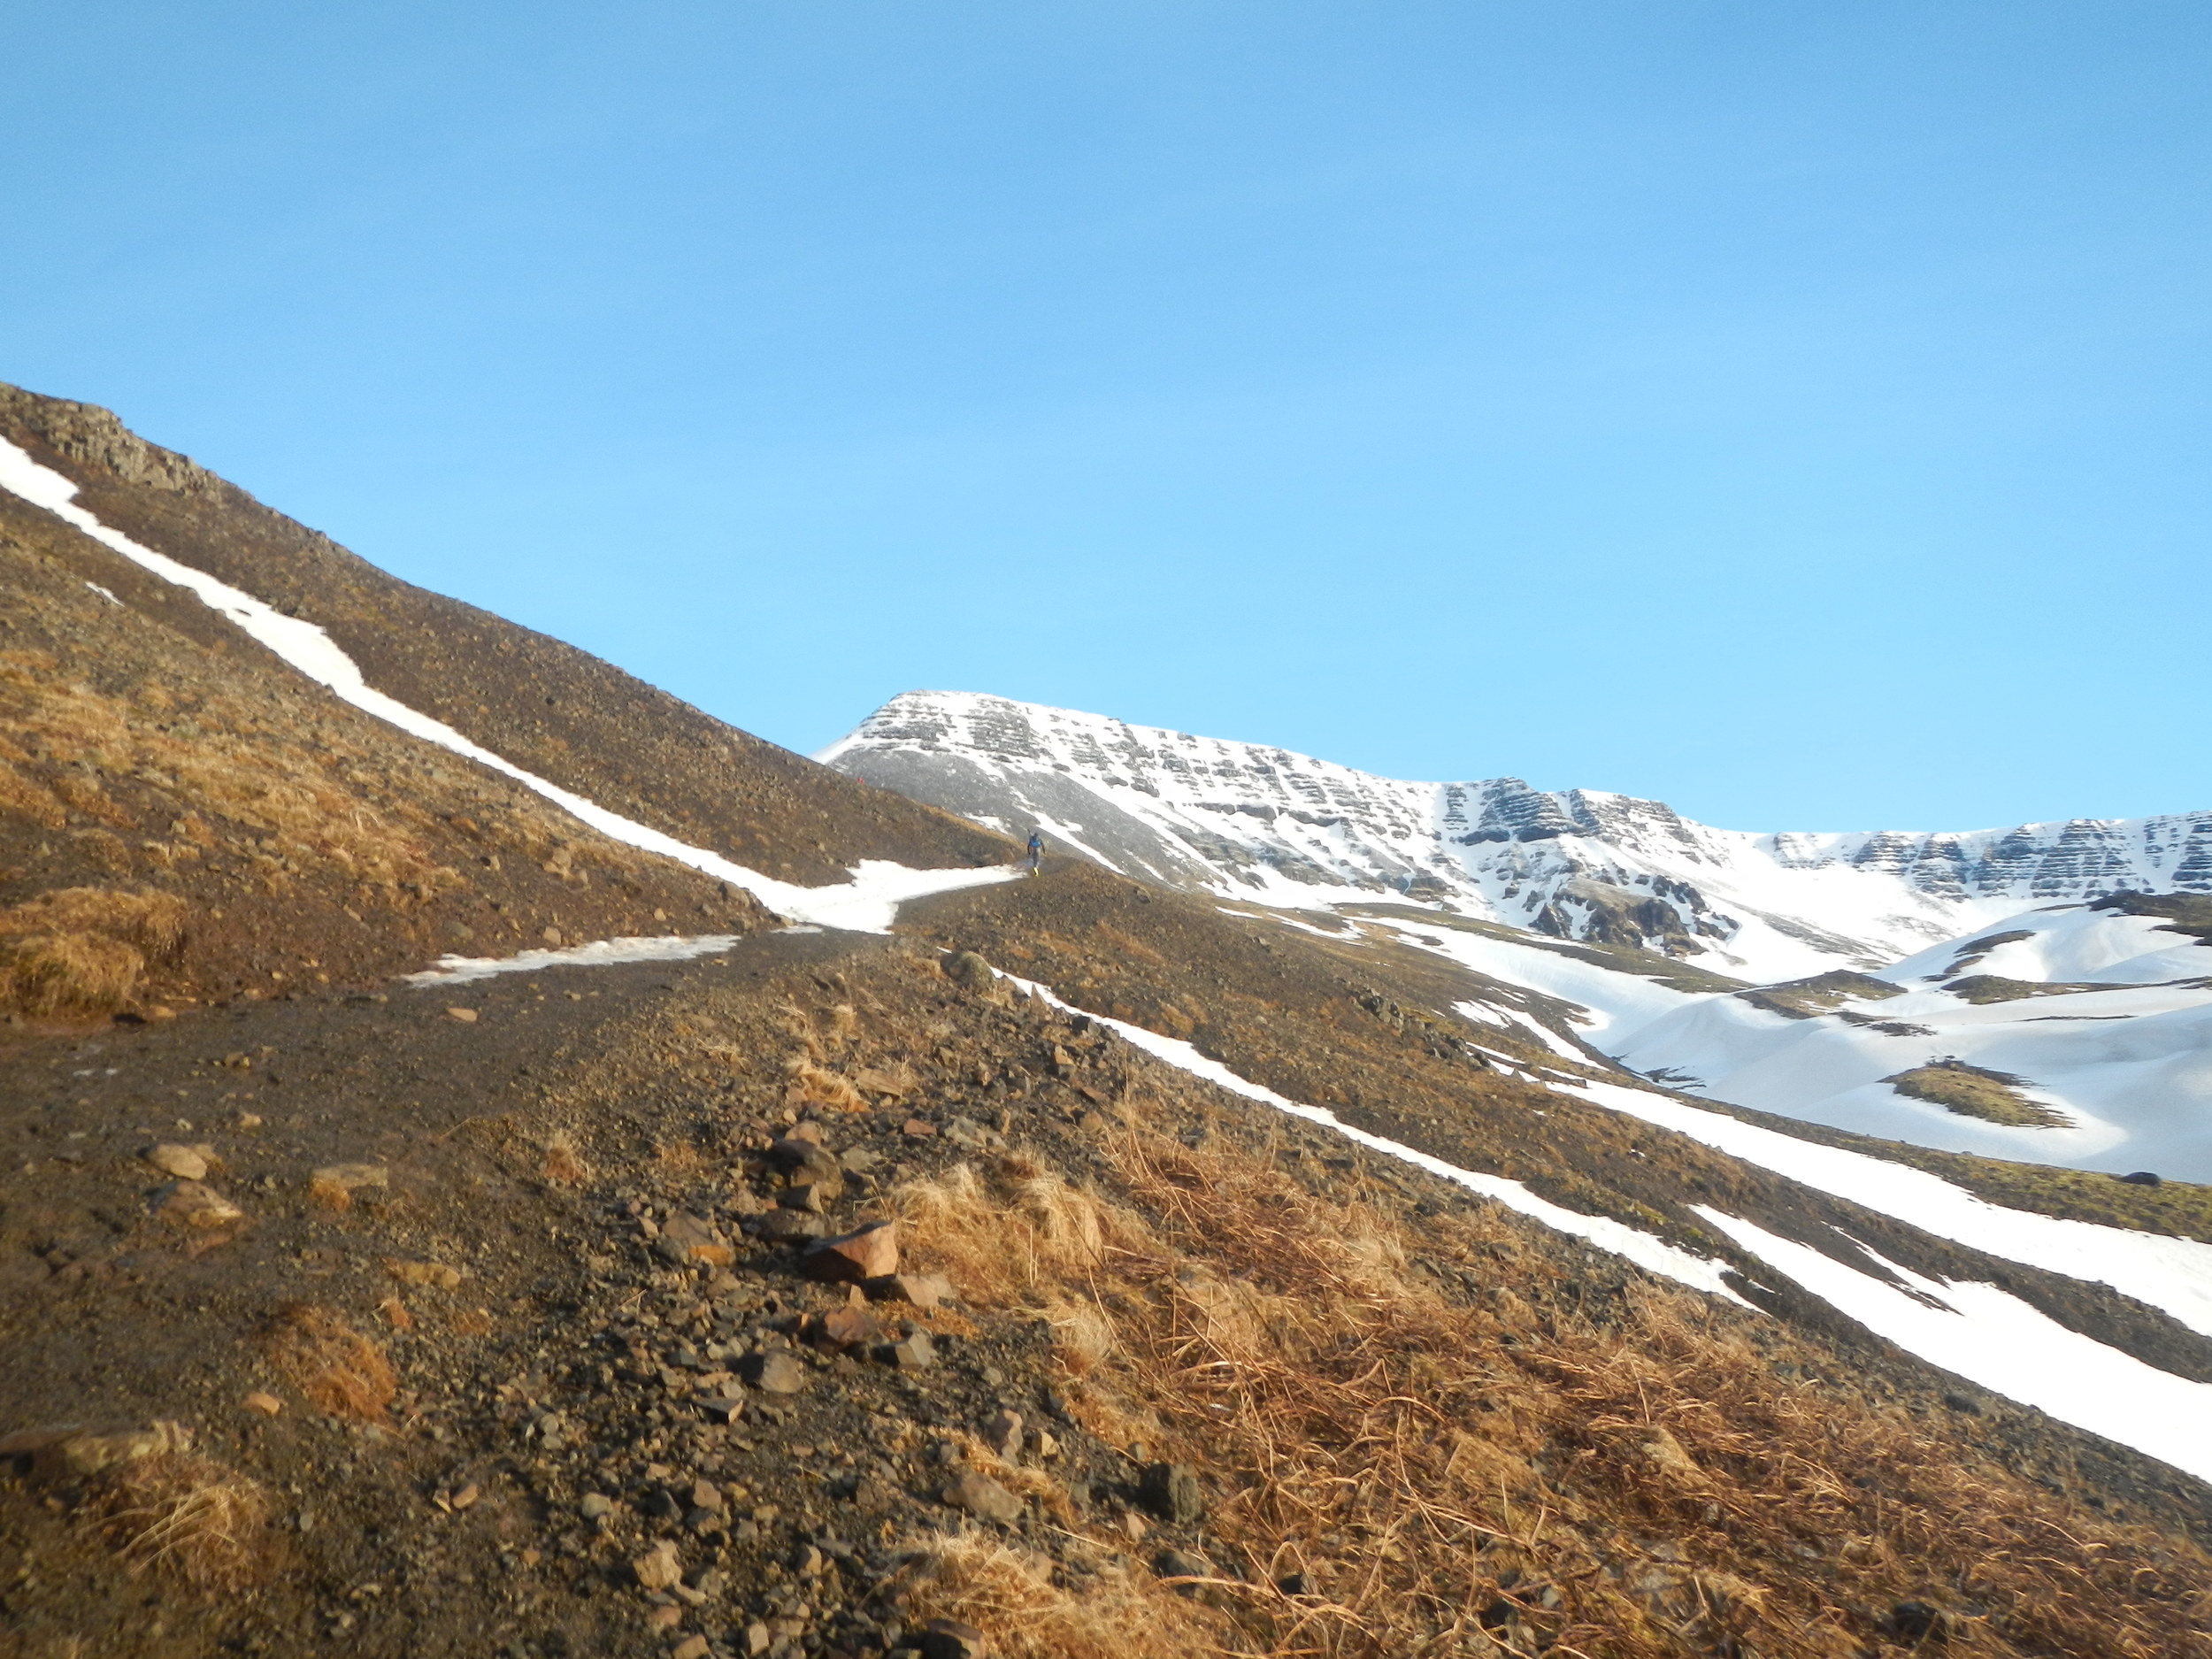 The slope in Mt. Esja